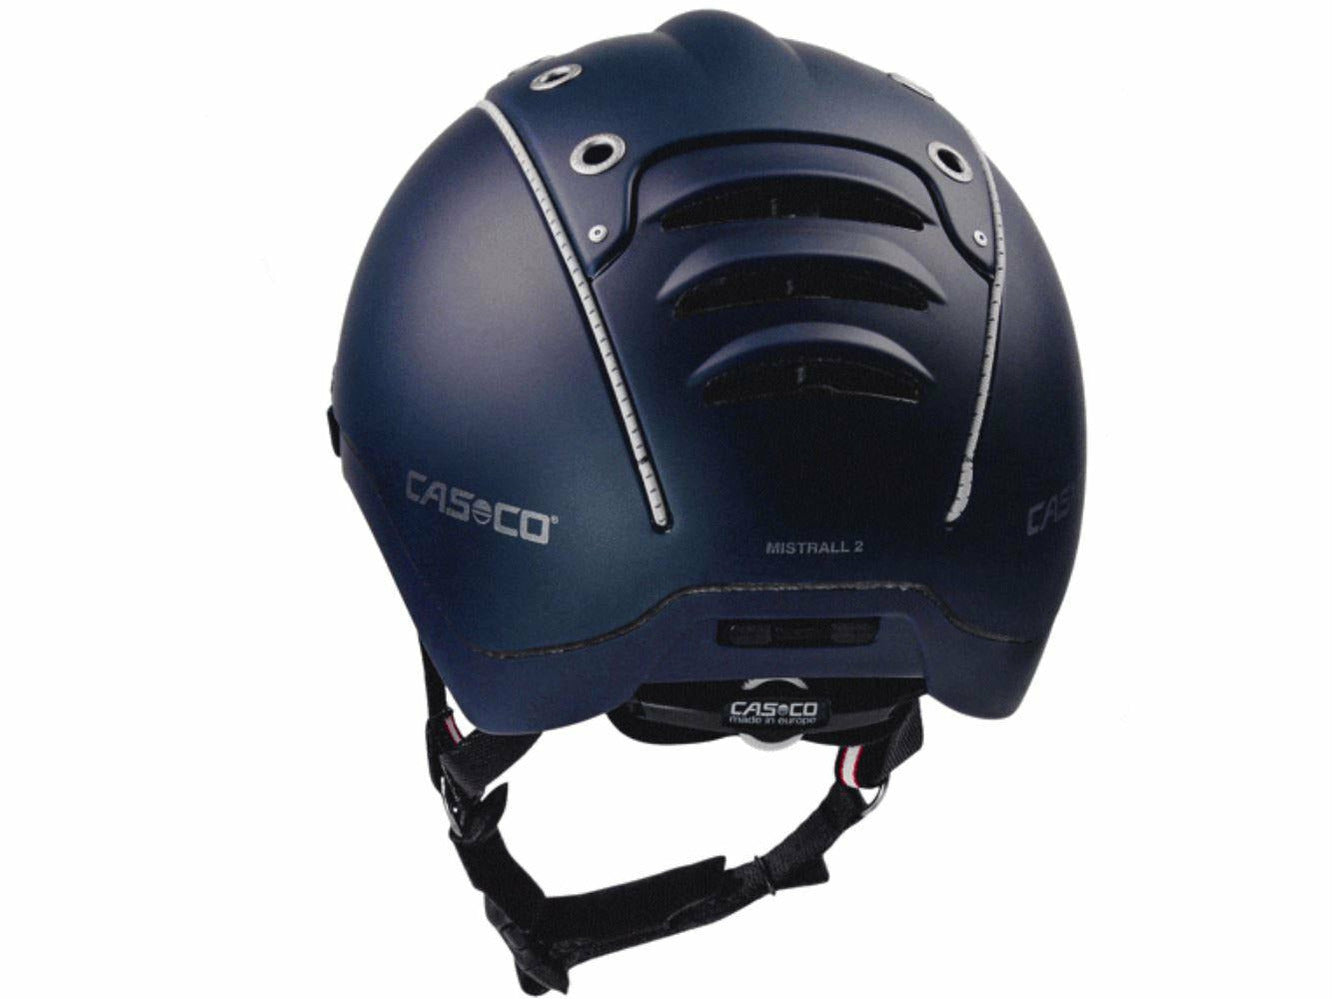 Casco riding helmet Mistrall-2